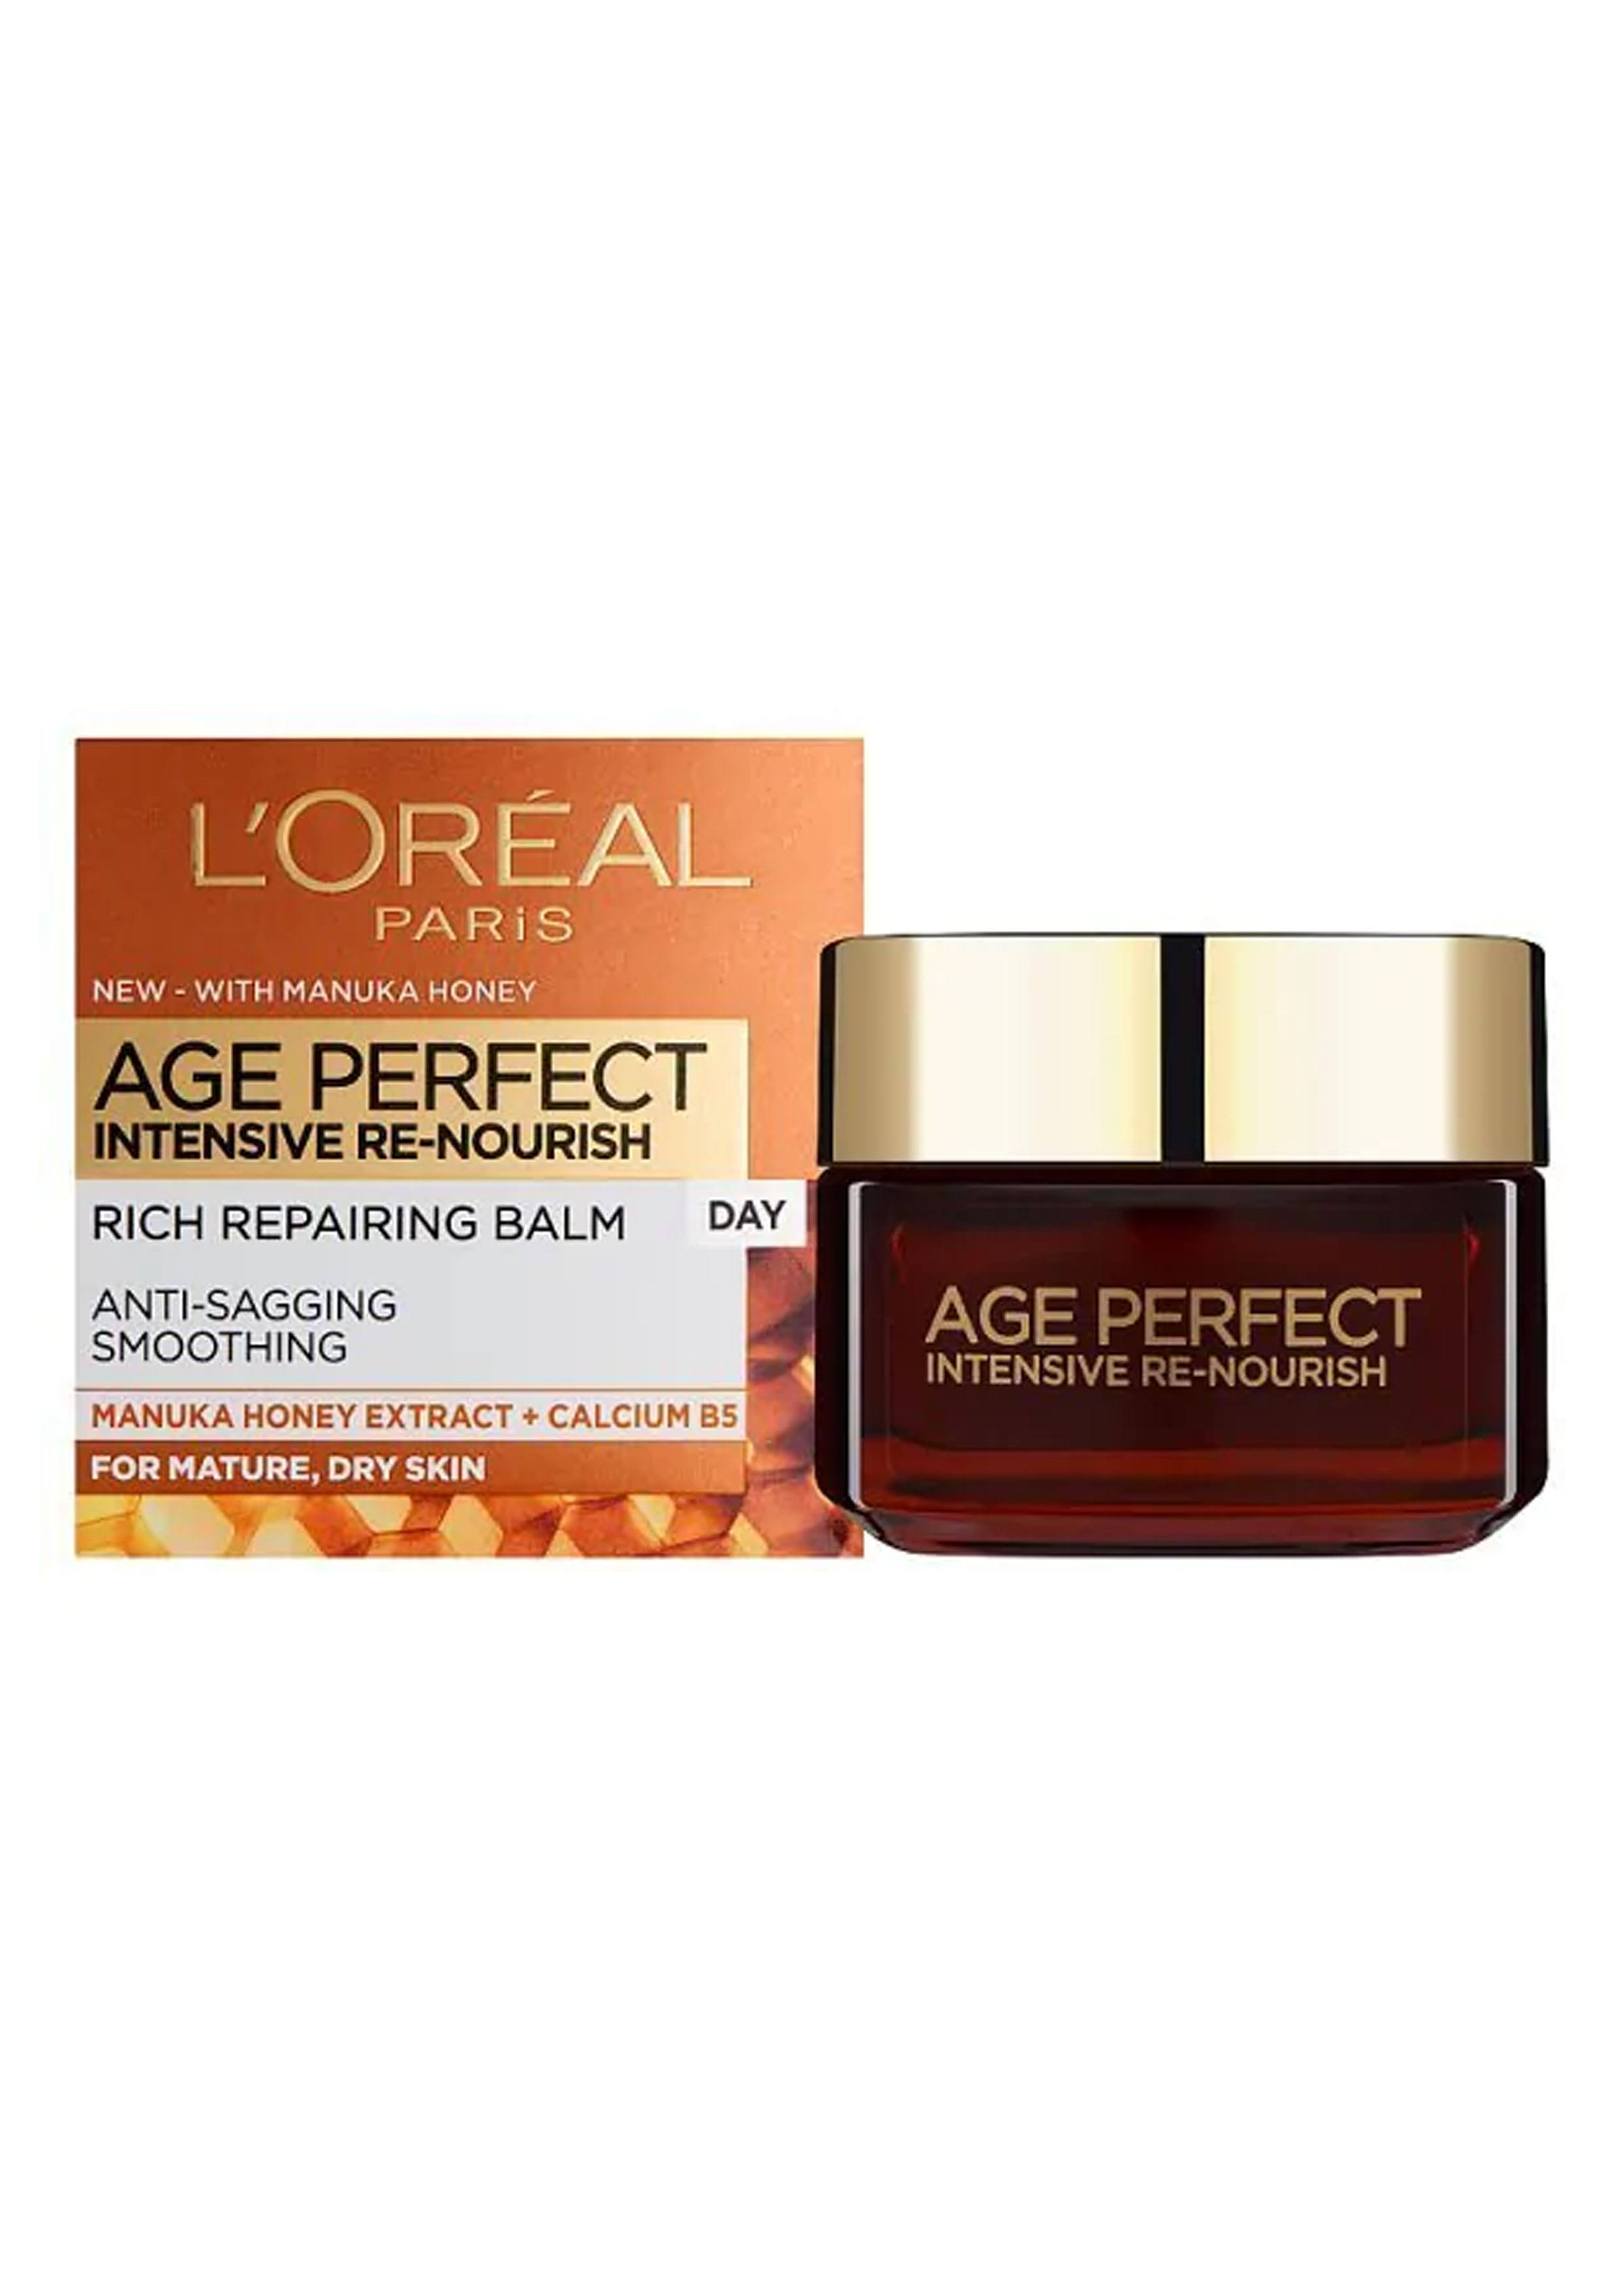 L'Oreal Age Perfect Intensive Renourish Day Cream - Manuka Honey, 50ml